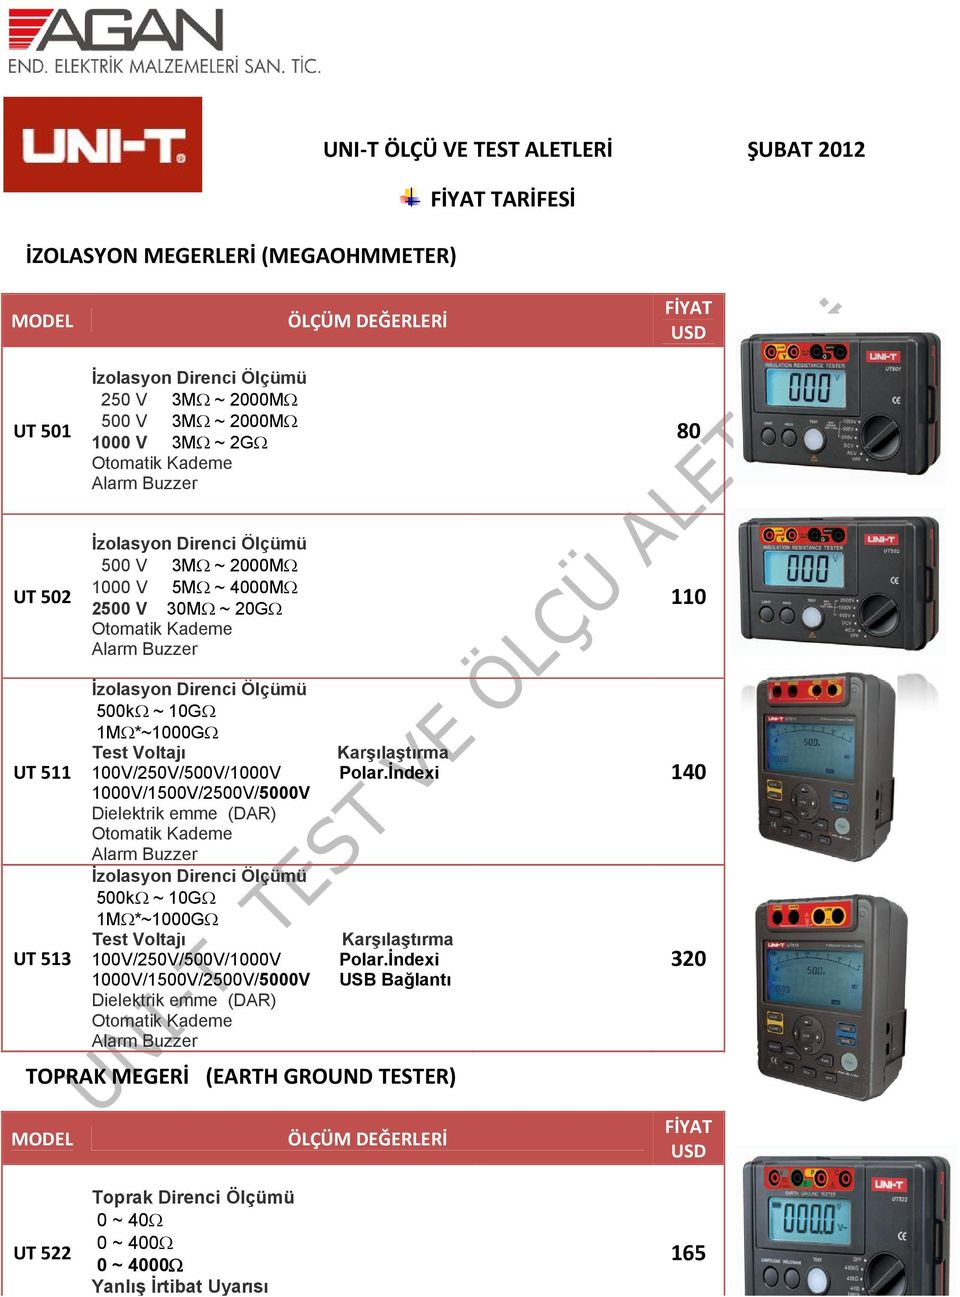 1000V/1500V/2500V/5000V Dielektrik emme (DAR) Alarm Buzzer İzolasyon Direnci Ölçümü 500k ~ 10G 1M *~1000G Test Voltajı 100V/250V/500V/1000V 1000V/1500V/2500V/5000V Dielektrik emme